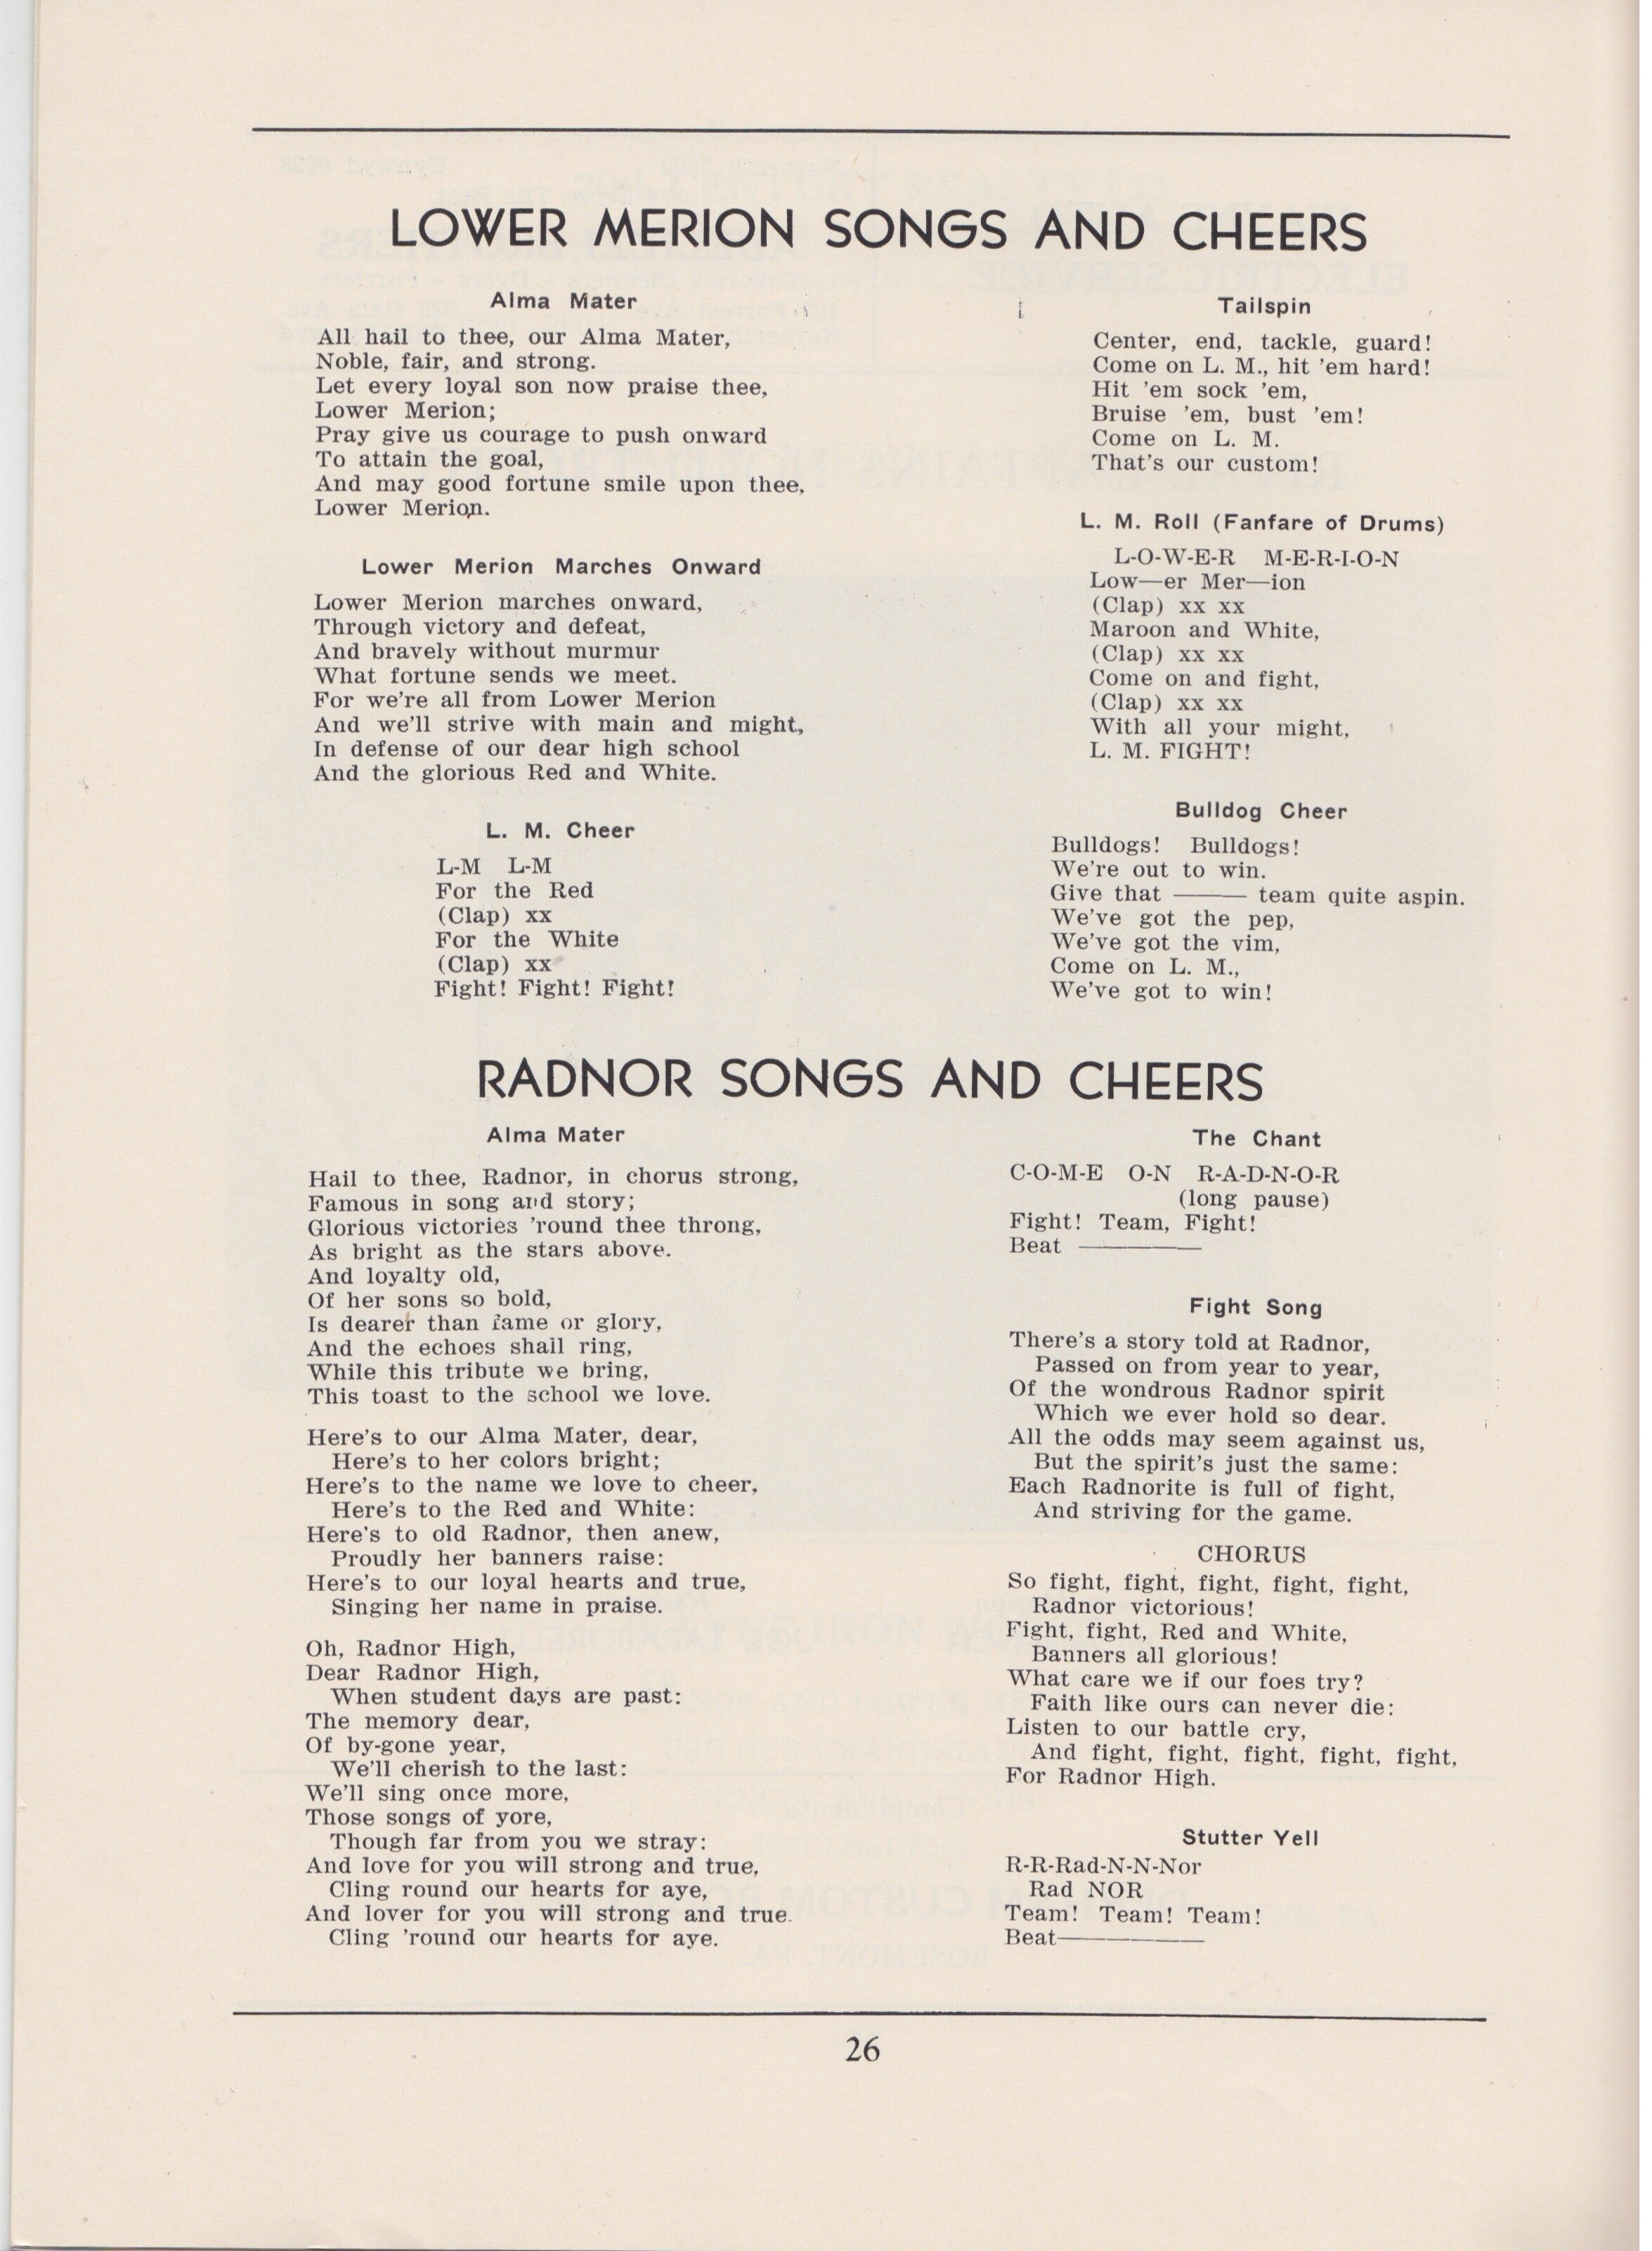 1949 Radnor LM Program RHS Archive 25.jpeg